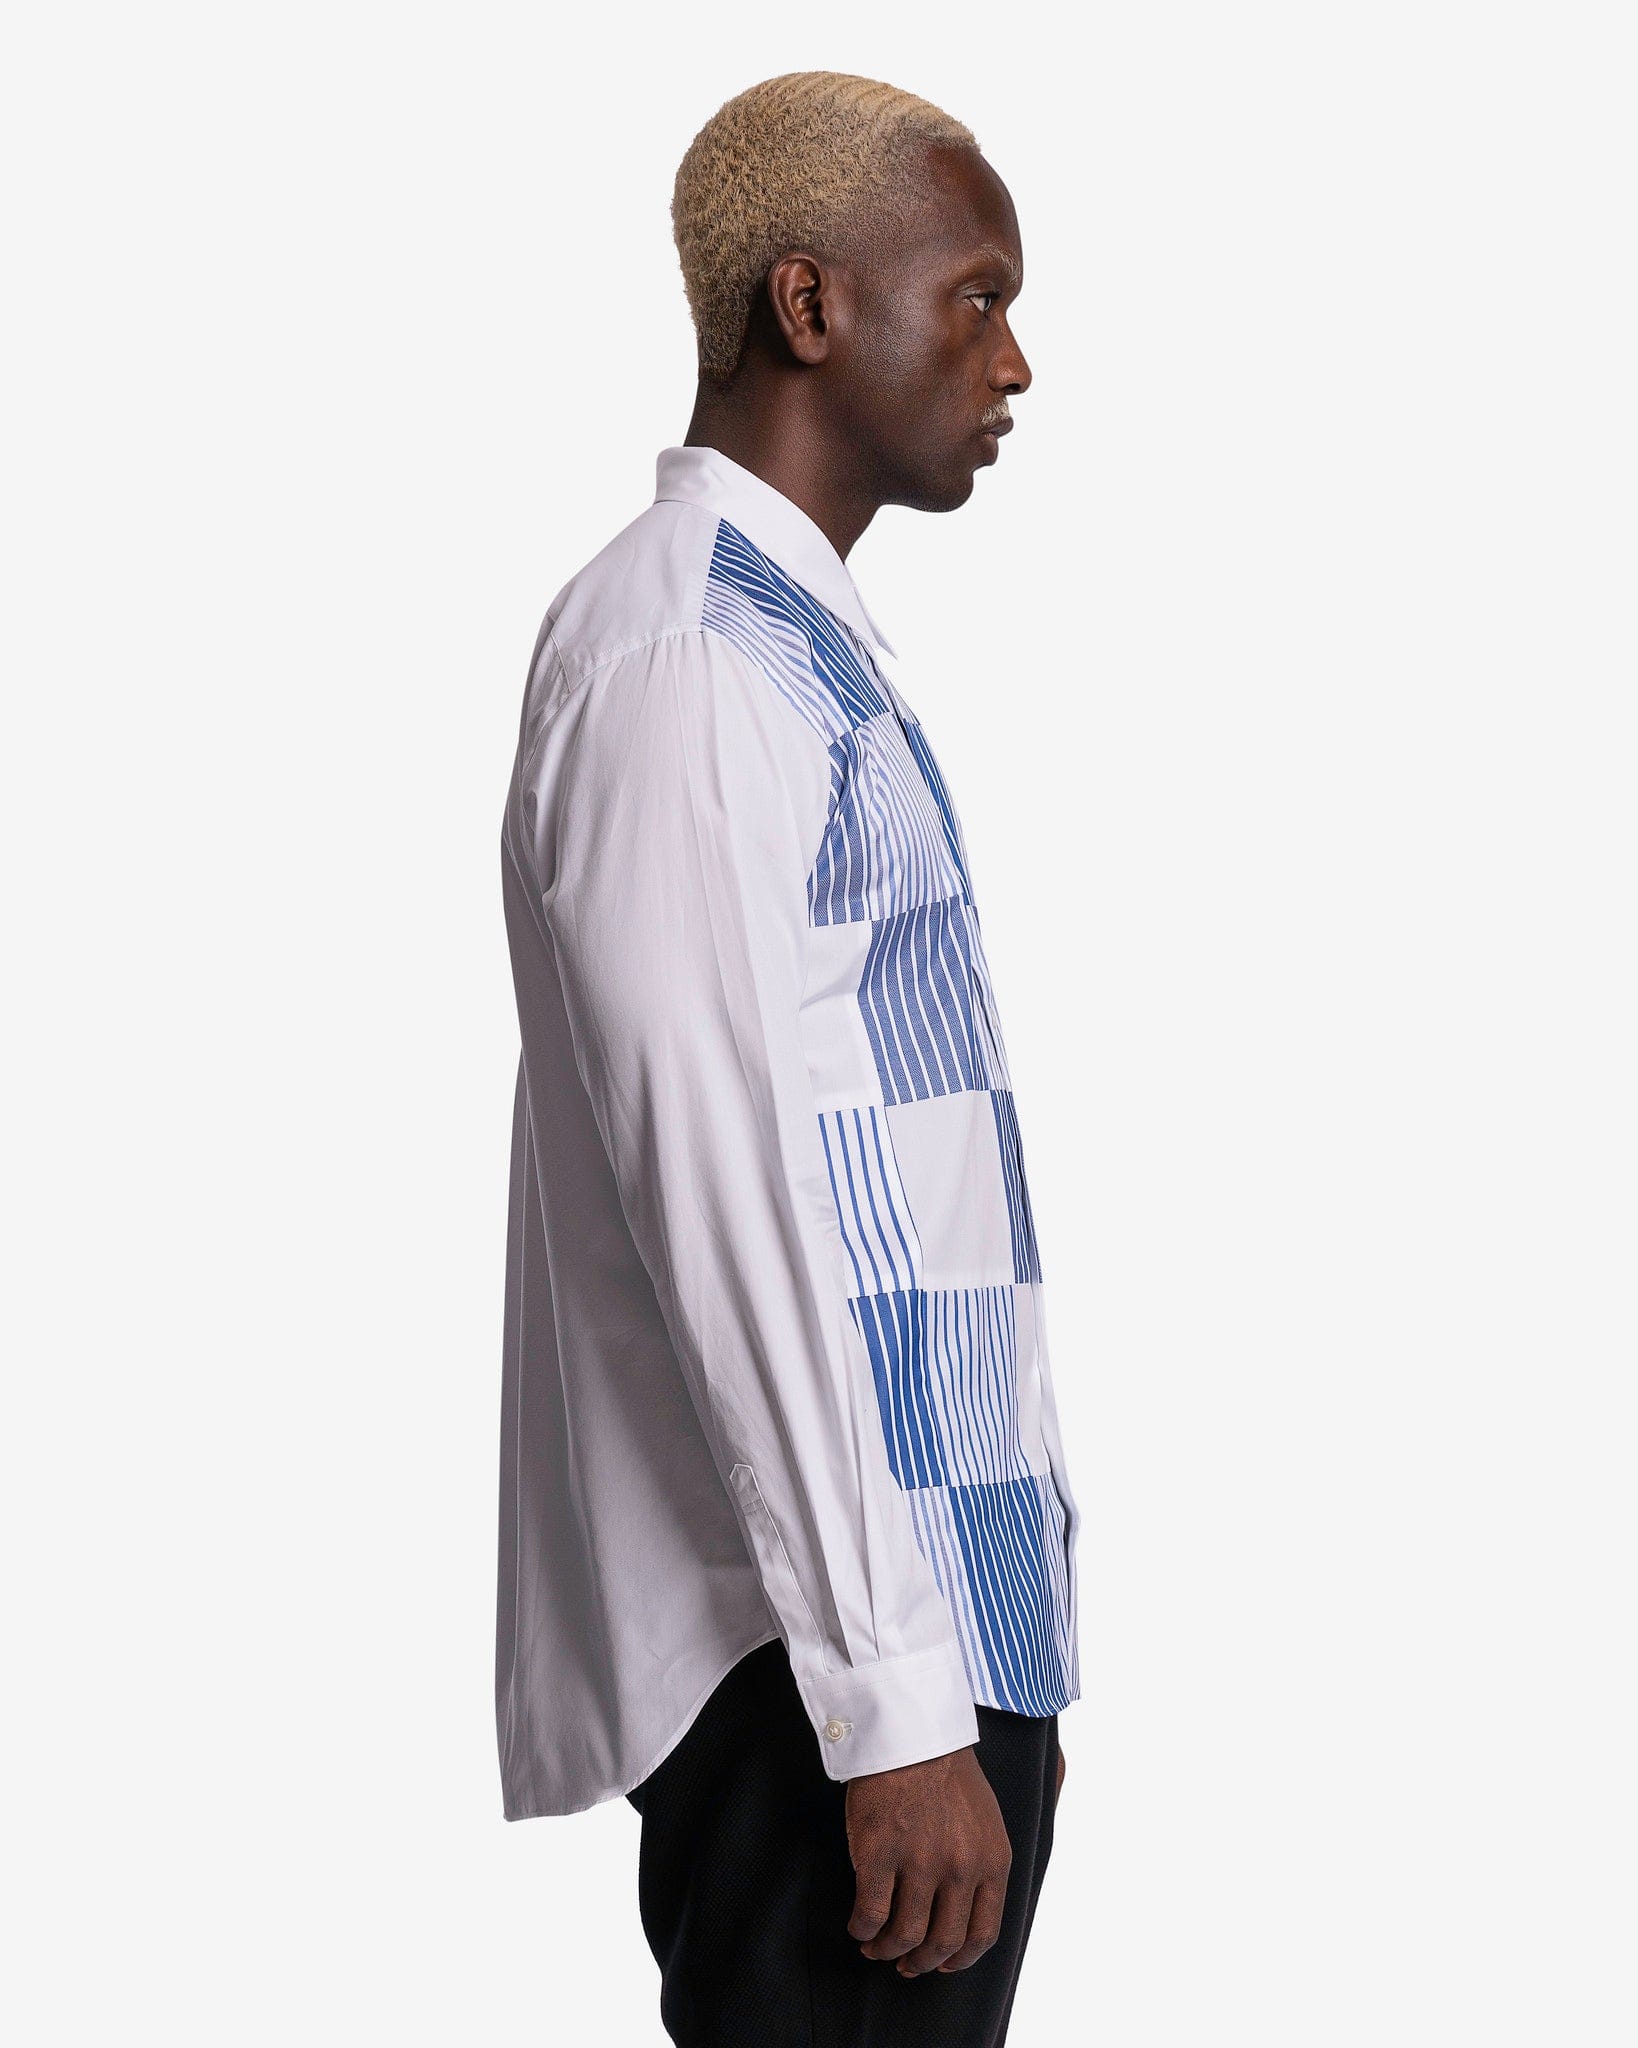 Comme des Garcons Homme Deux Men's Shirts Square Paneled Stripe Shirt in White